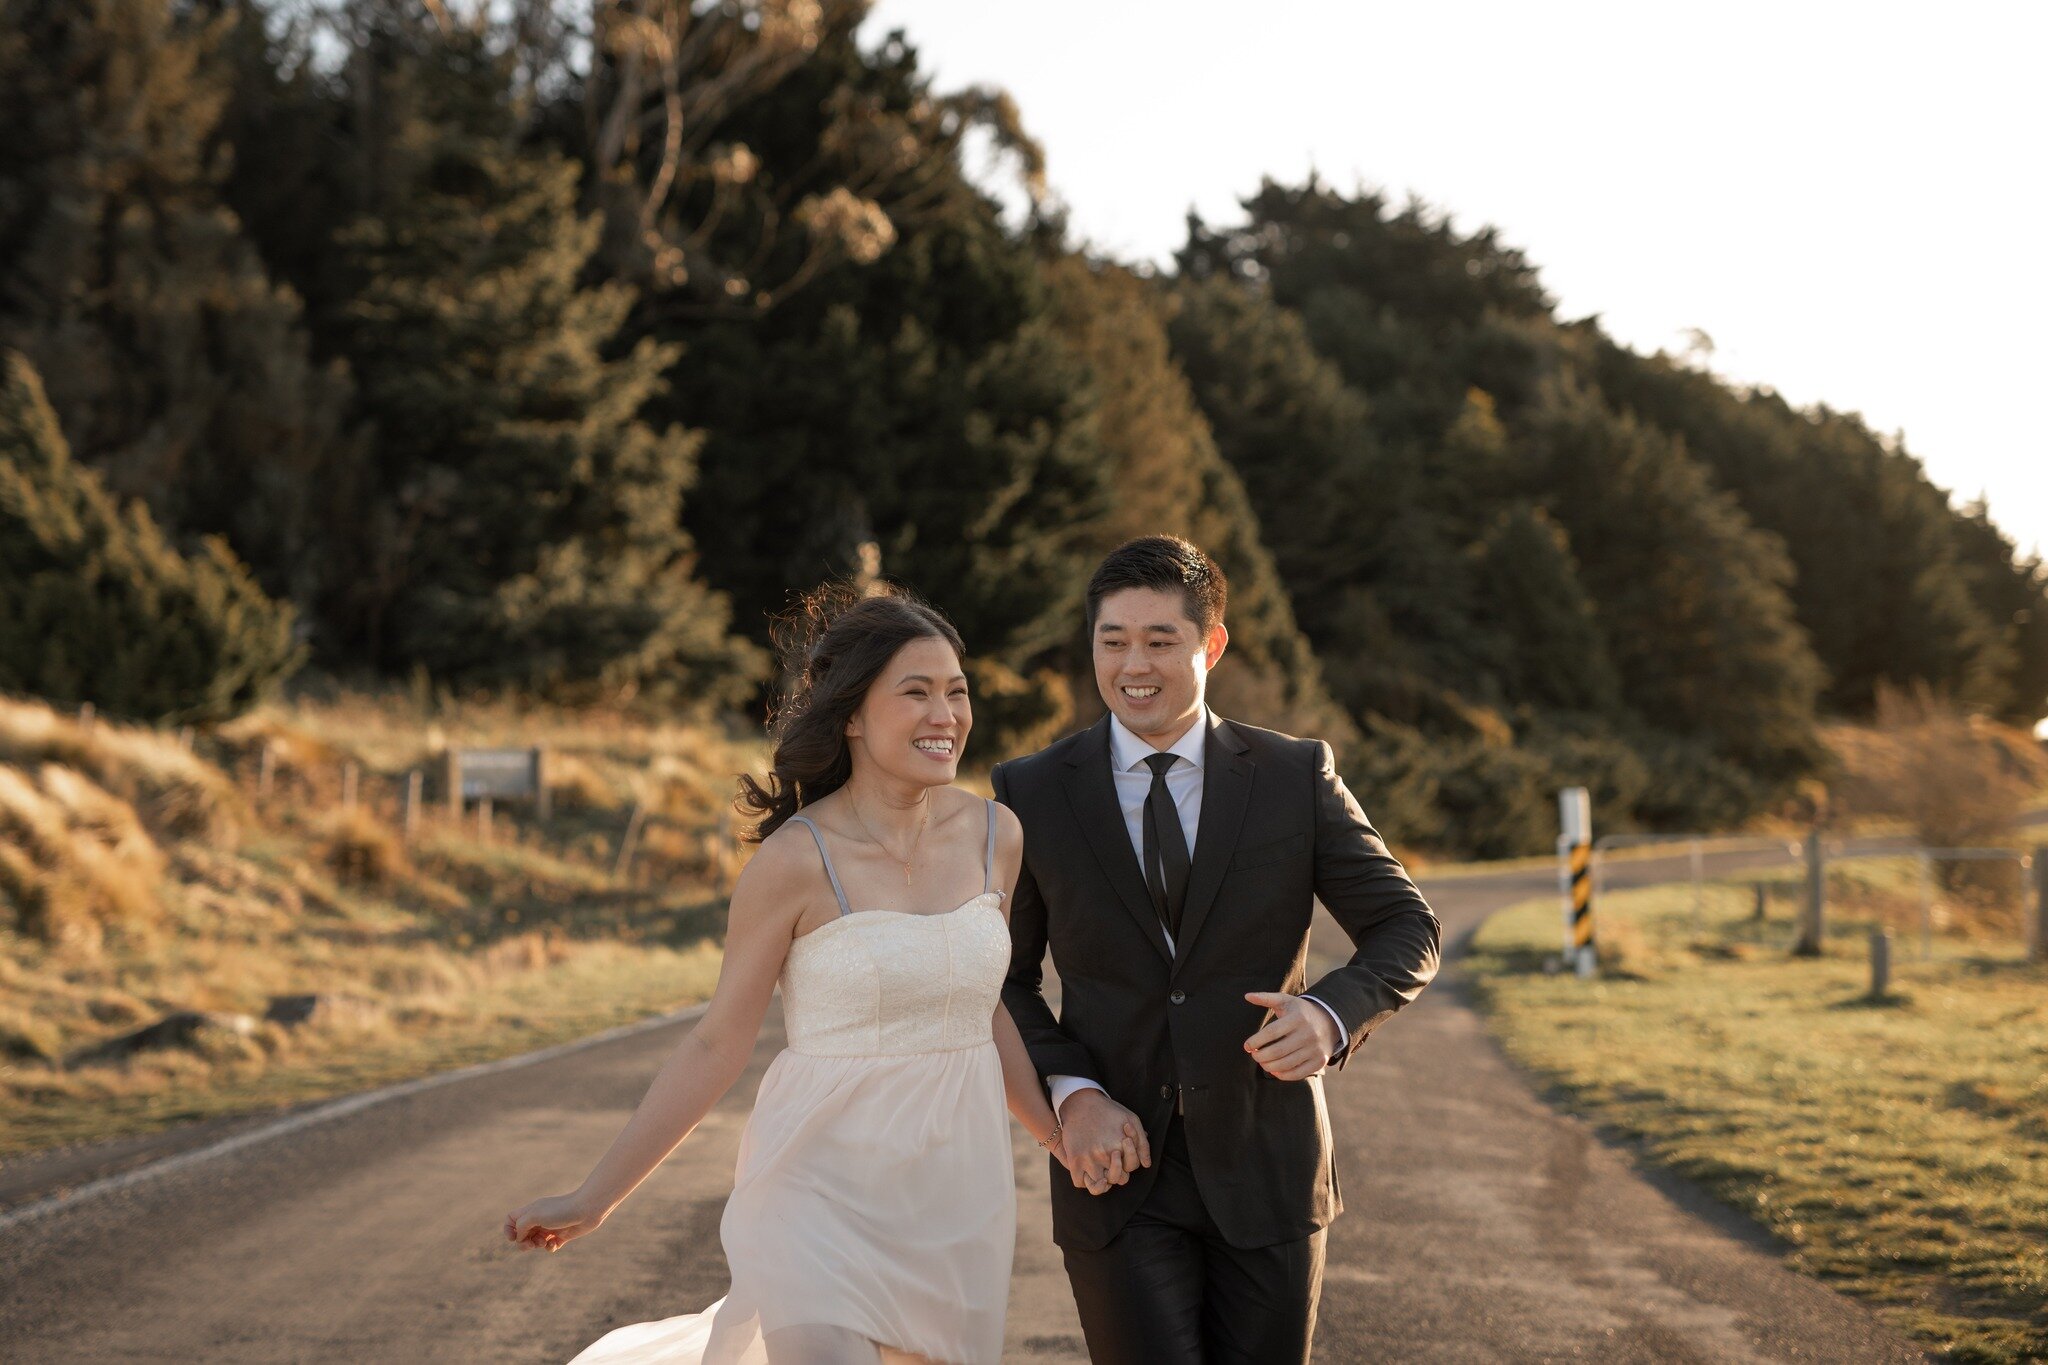 These two are getting married tomorrow!!! I cannot wait ⭐⭐⭐
.
.
.
 #newzealandweddingsmagazine #wedding #weddinginspiration #newzealandweddings #weddingchch #weddingnz #weddingnzn #weddingnzinspo #weddingnzstyle #wedding